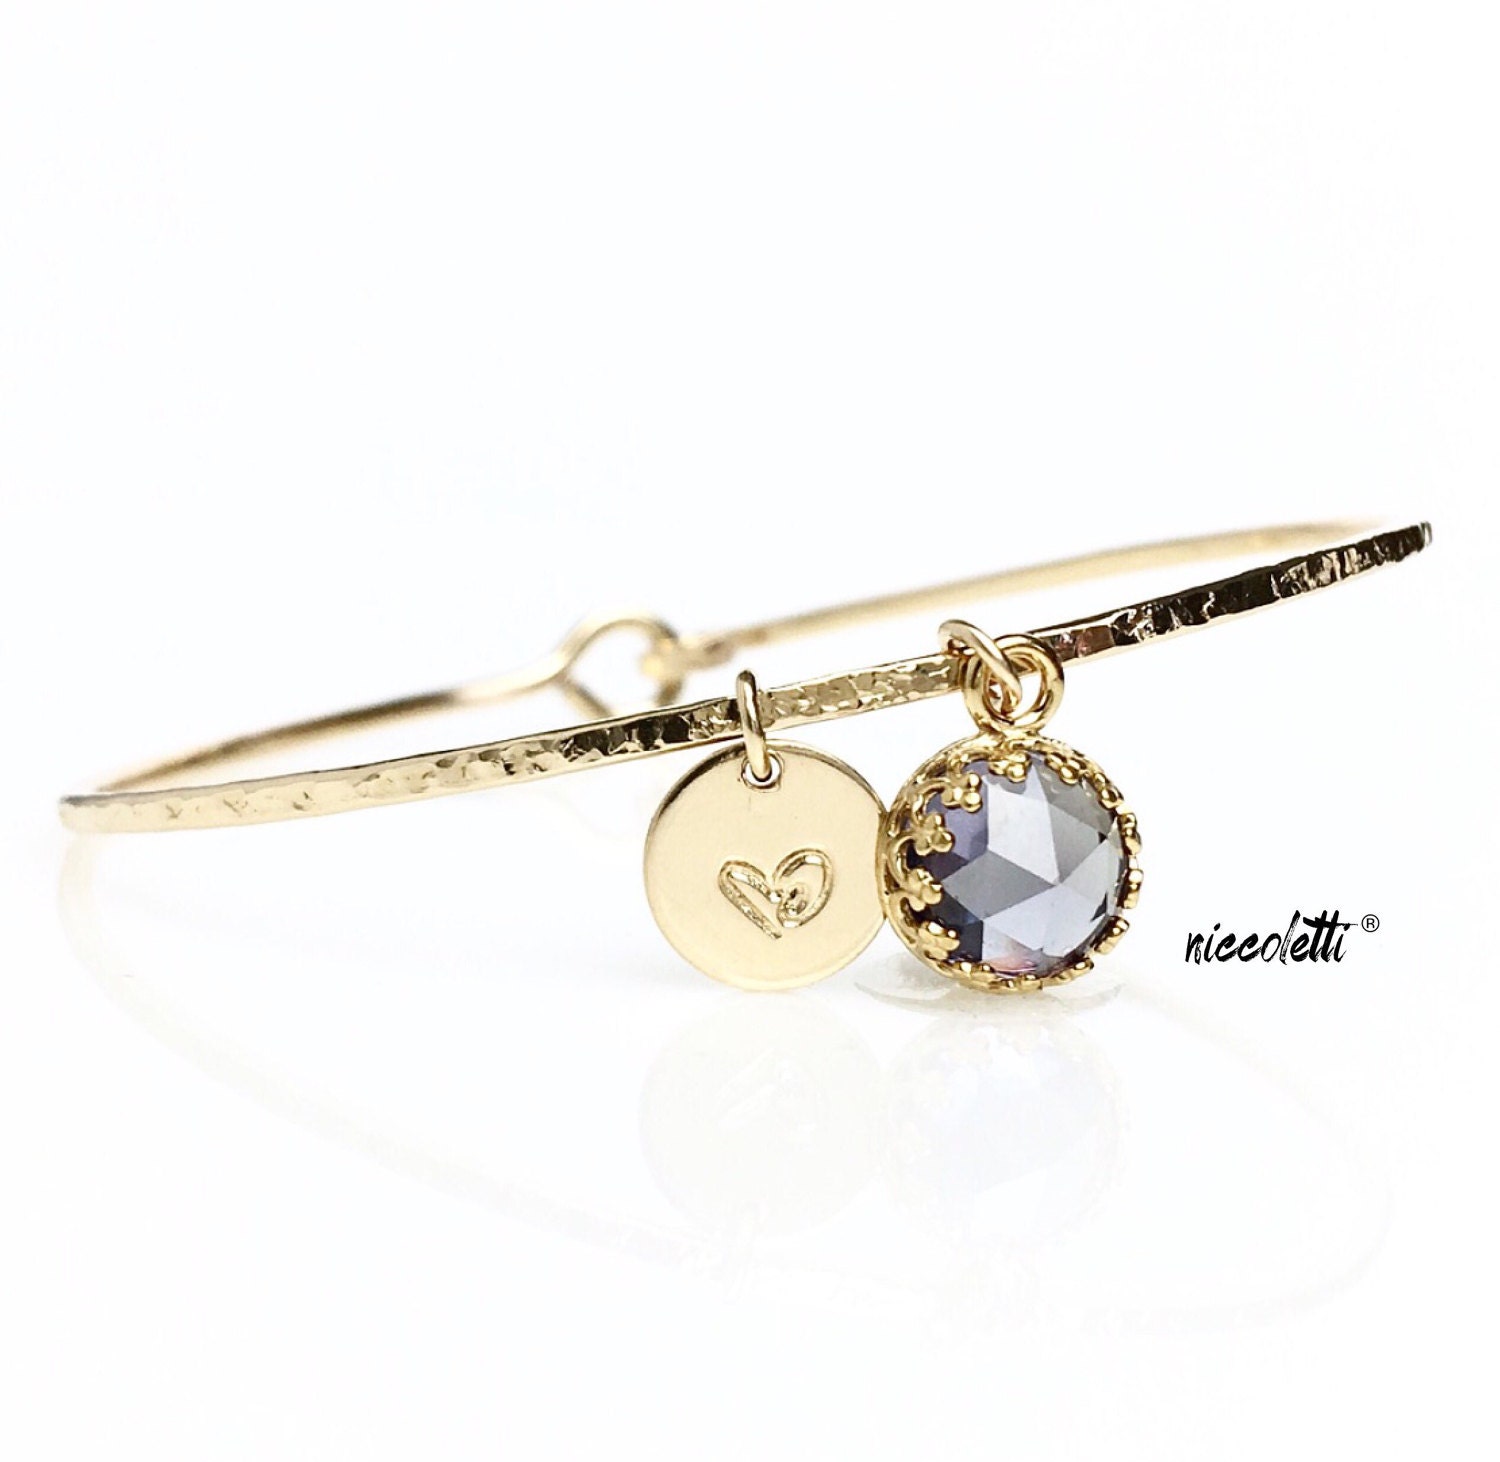 Alexandrite Charm Bracelet / 14k Gold Filled or Sterling Gemstone Bangle / Mothers Birthstone Jewelry / June Birthday Gift for Her